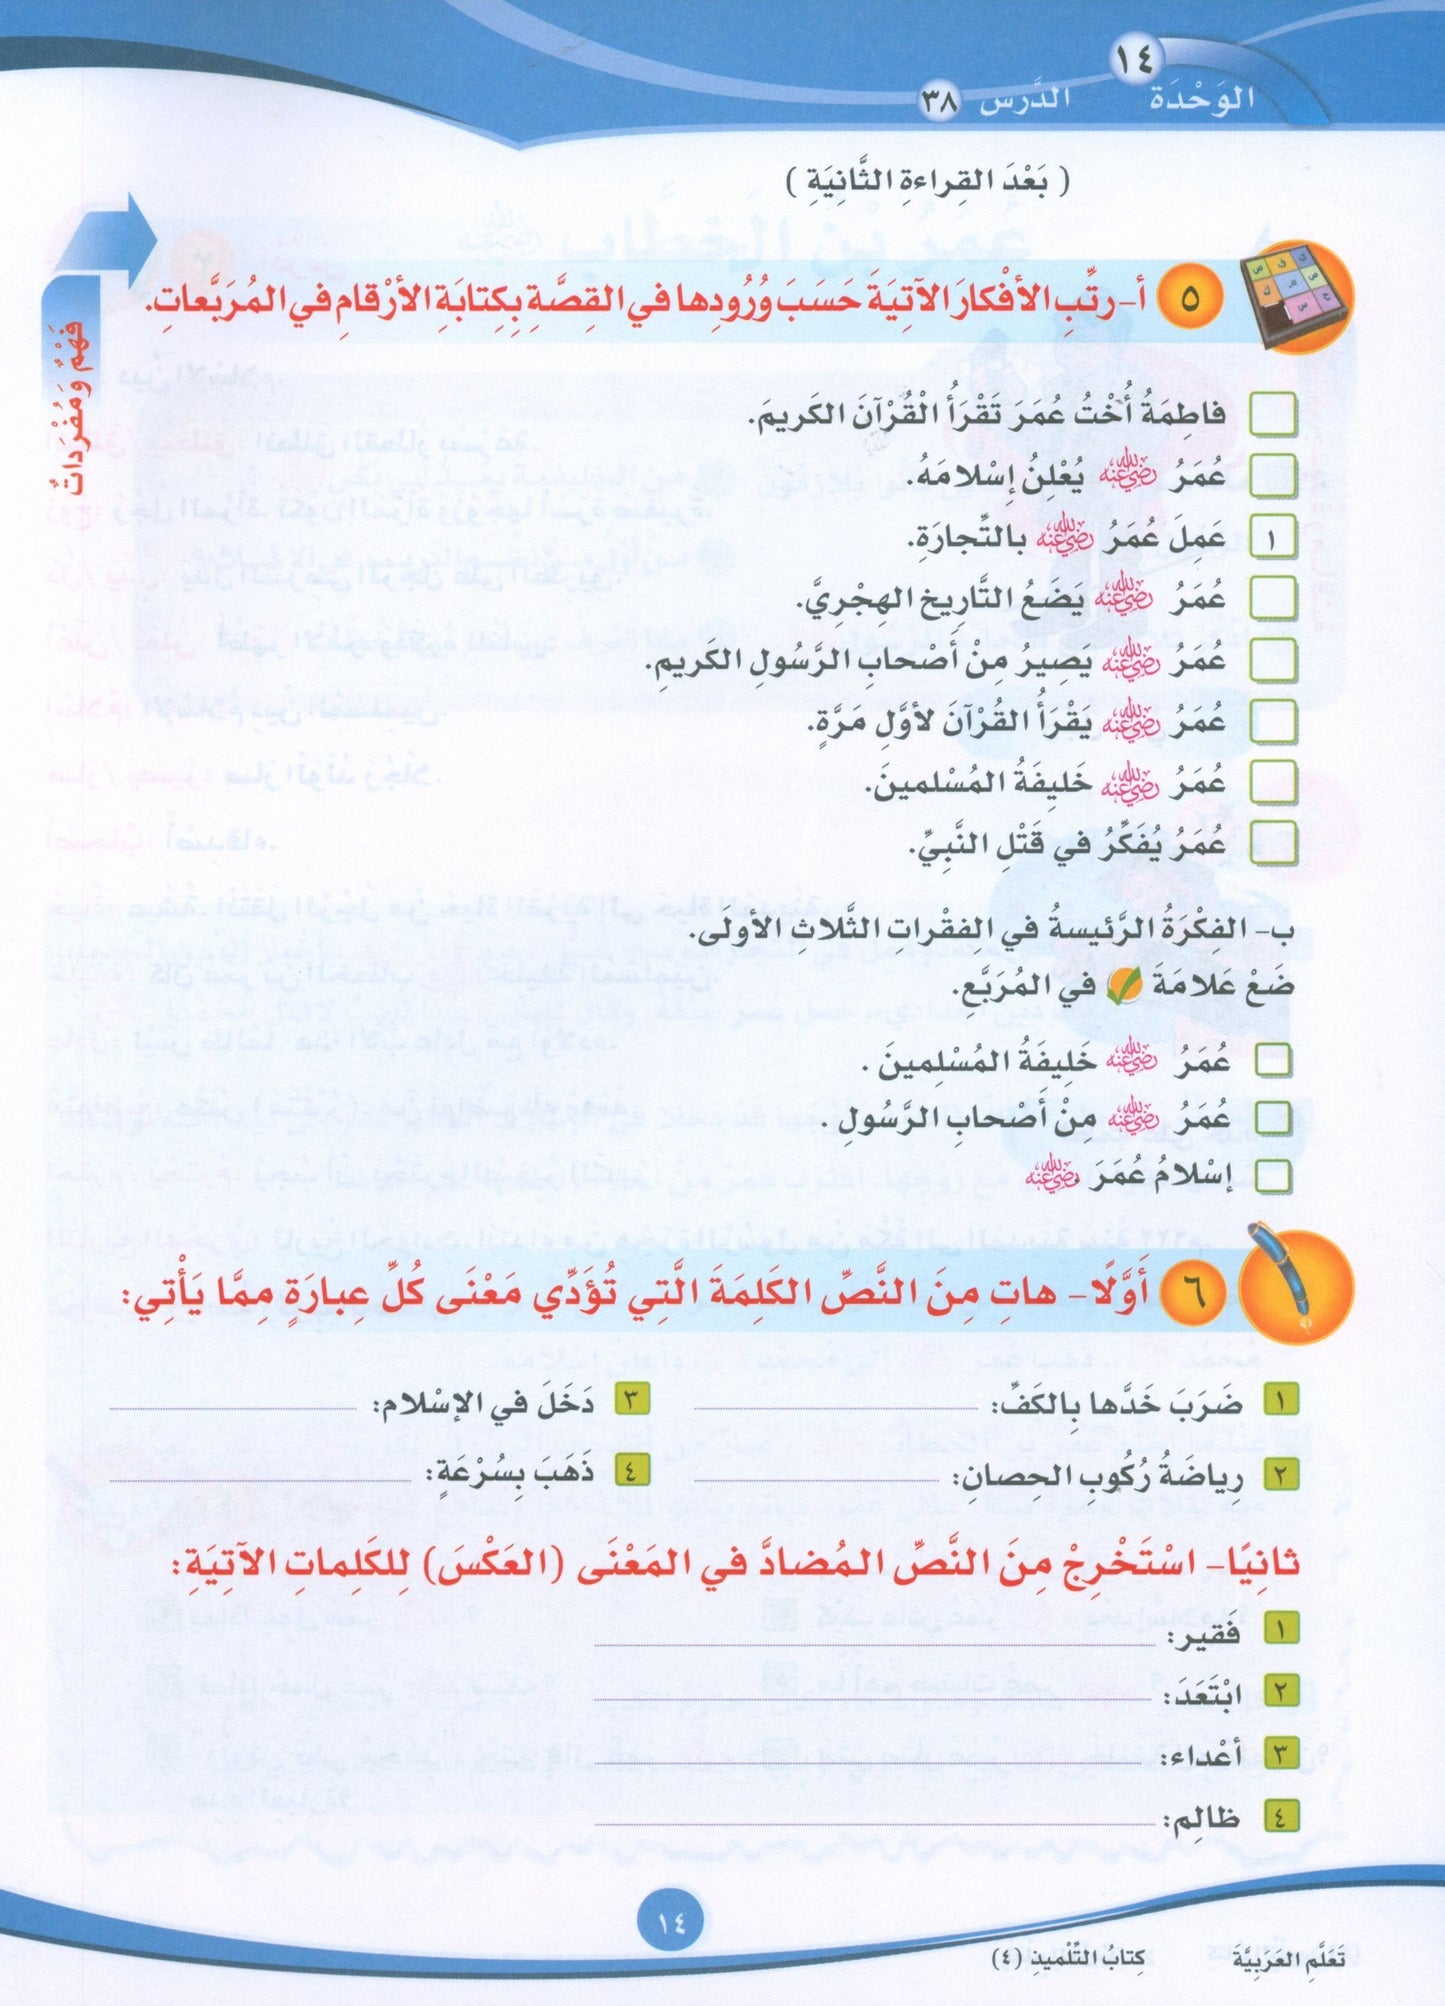 ICO Learn Arabic - Textbook - Level 4 Part 2 - تعلم العربية